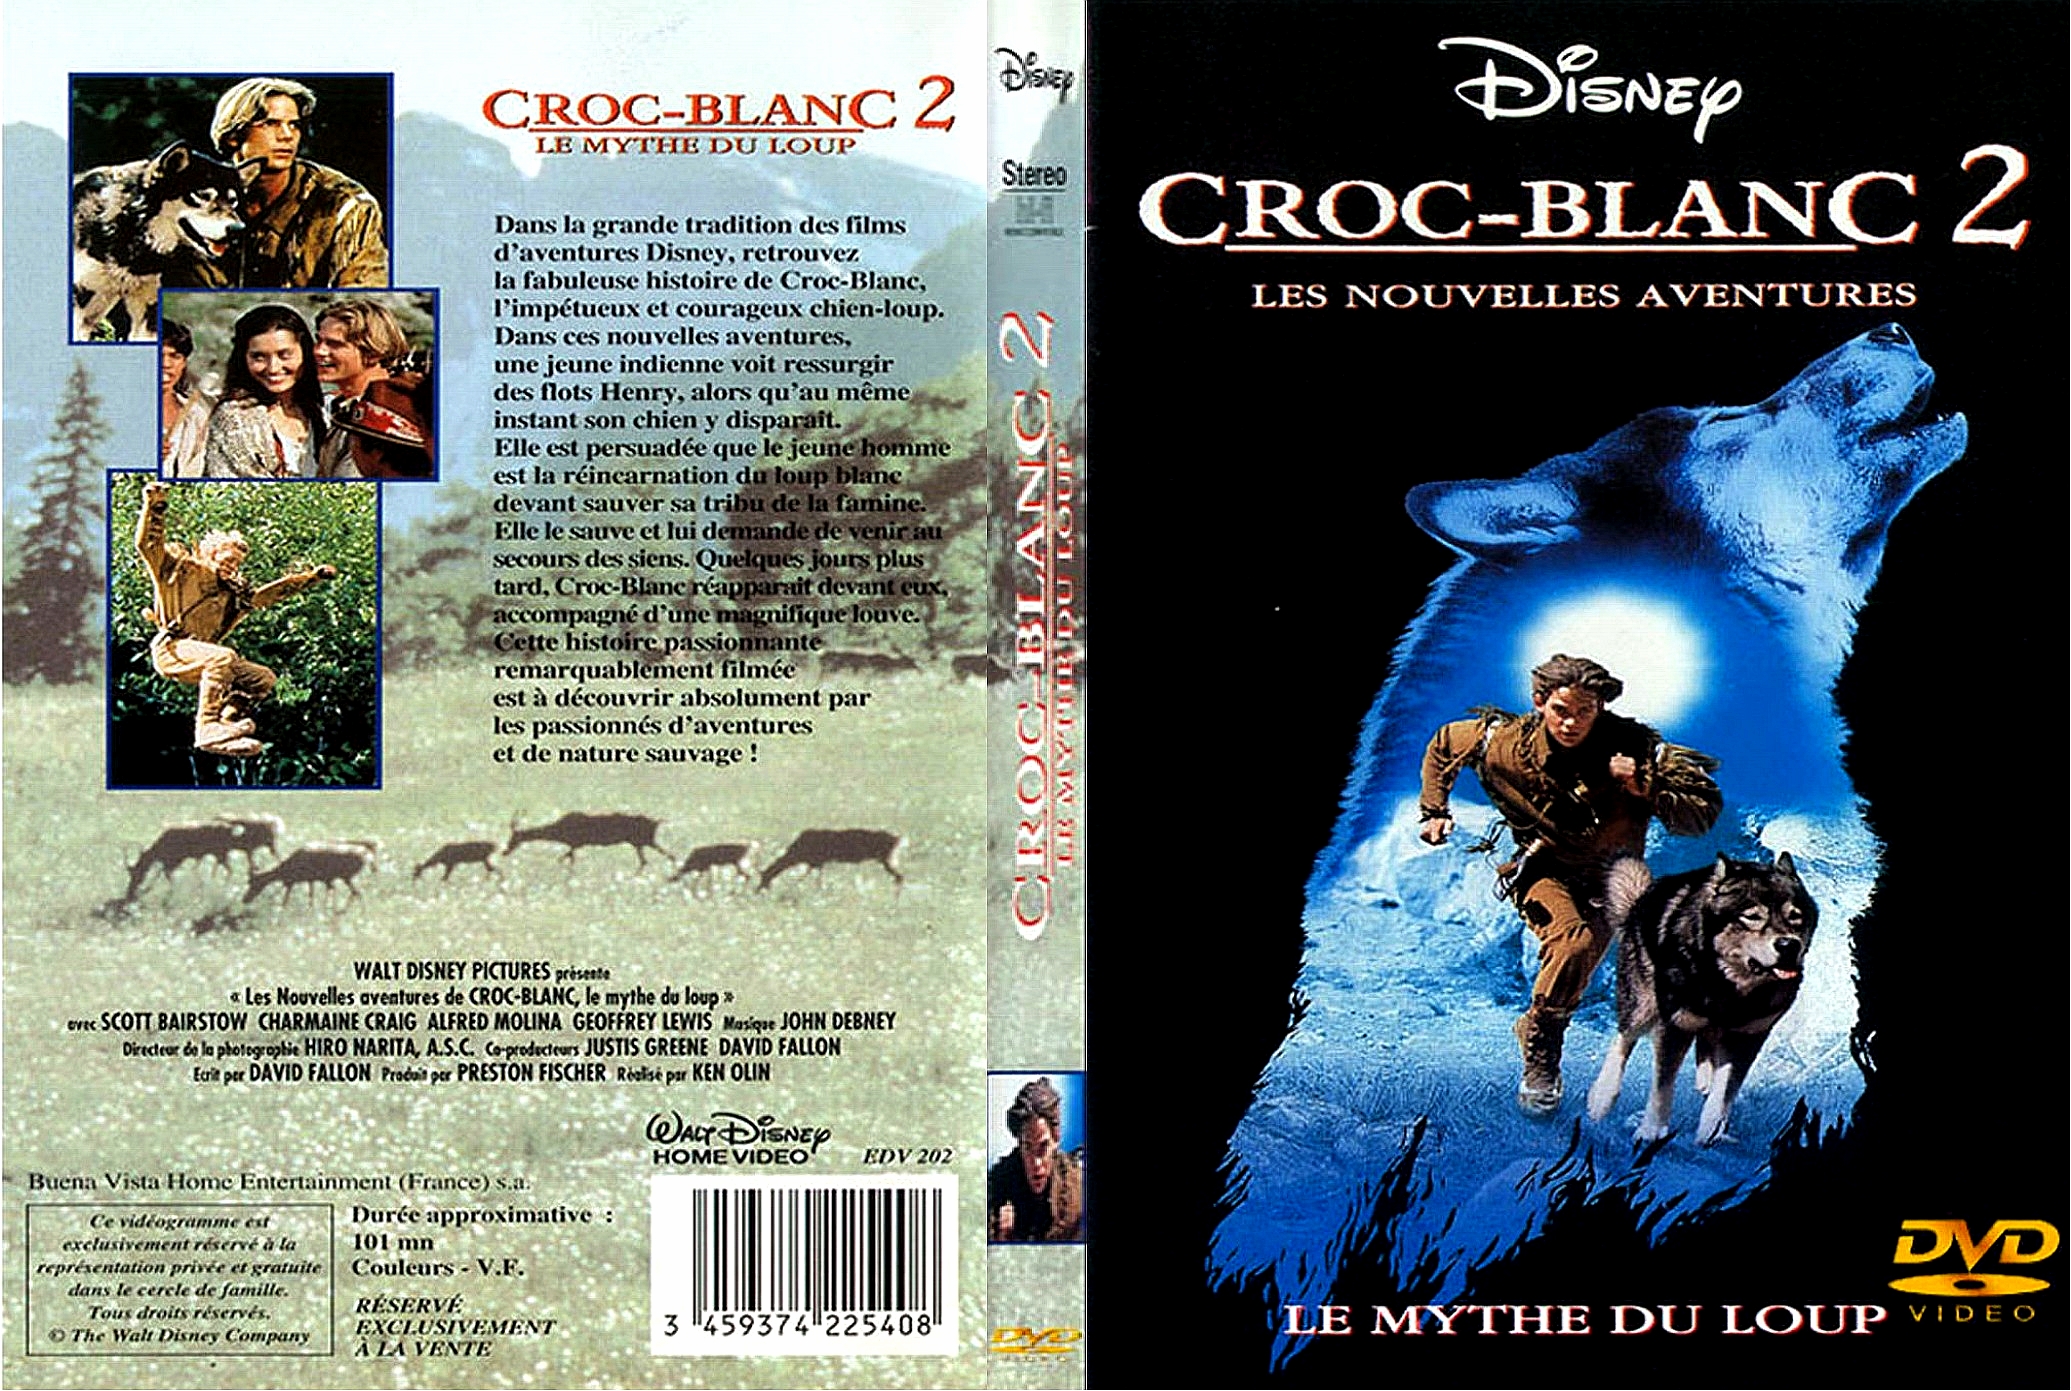 Jaquette DVD Croc-Blanc 2 custom